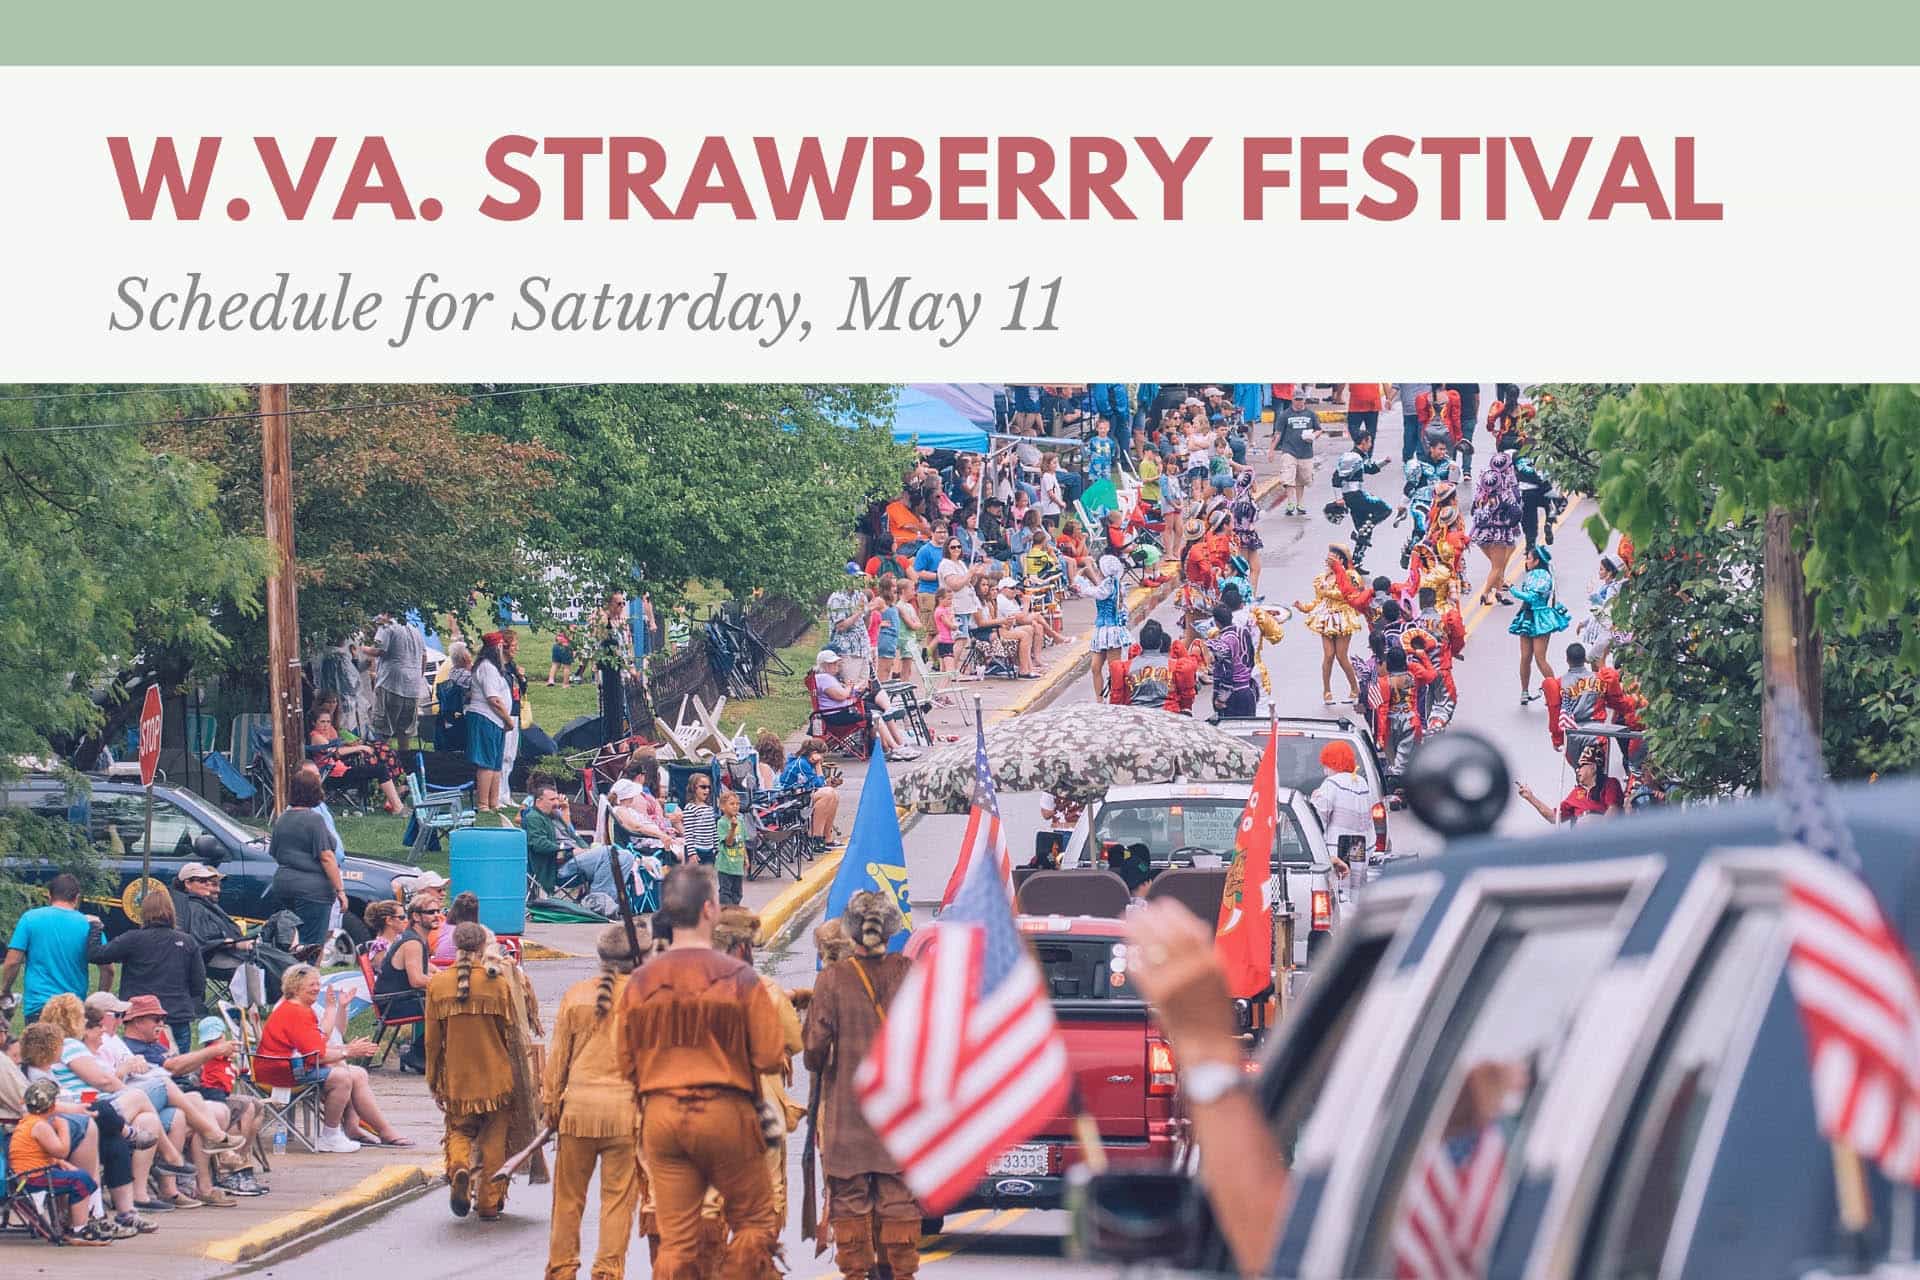 W.Va. Strawberry Festival Schedule - May 11